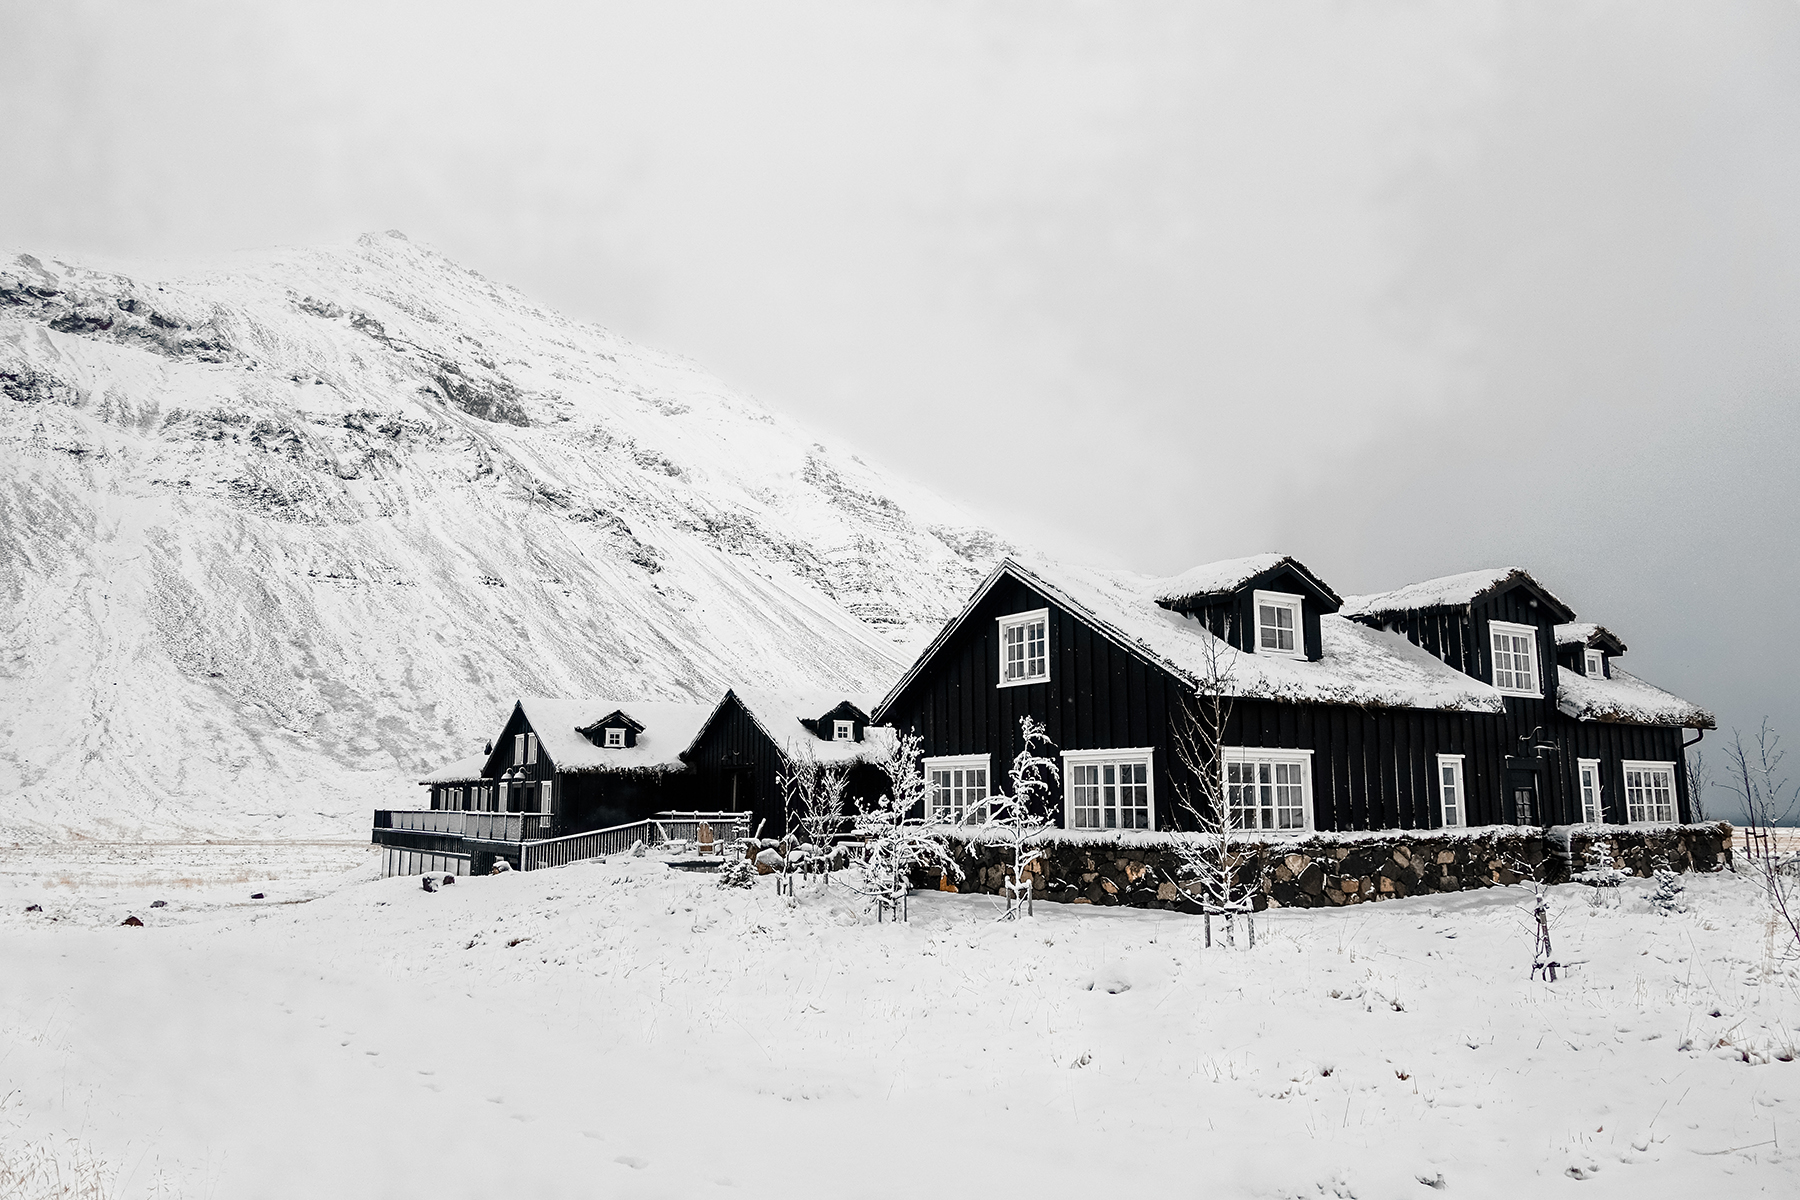 Alyssa Campanella of The A List blog visits Deplar Farm in northern Iceland